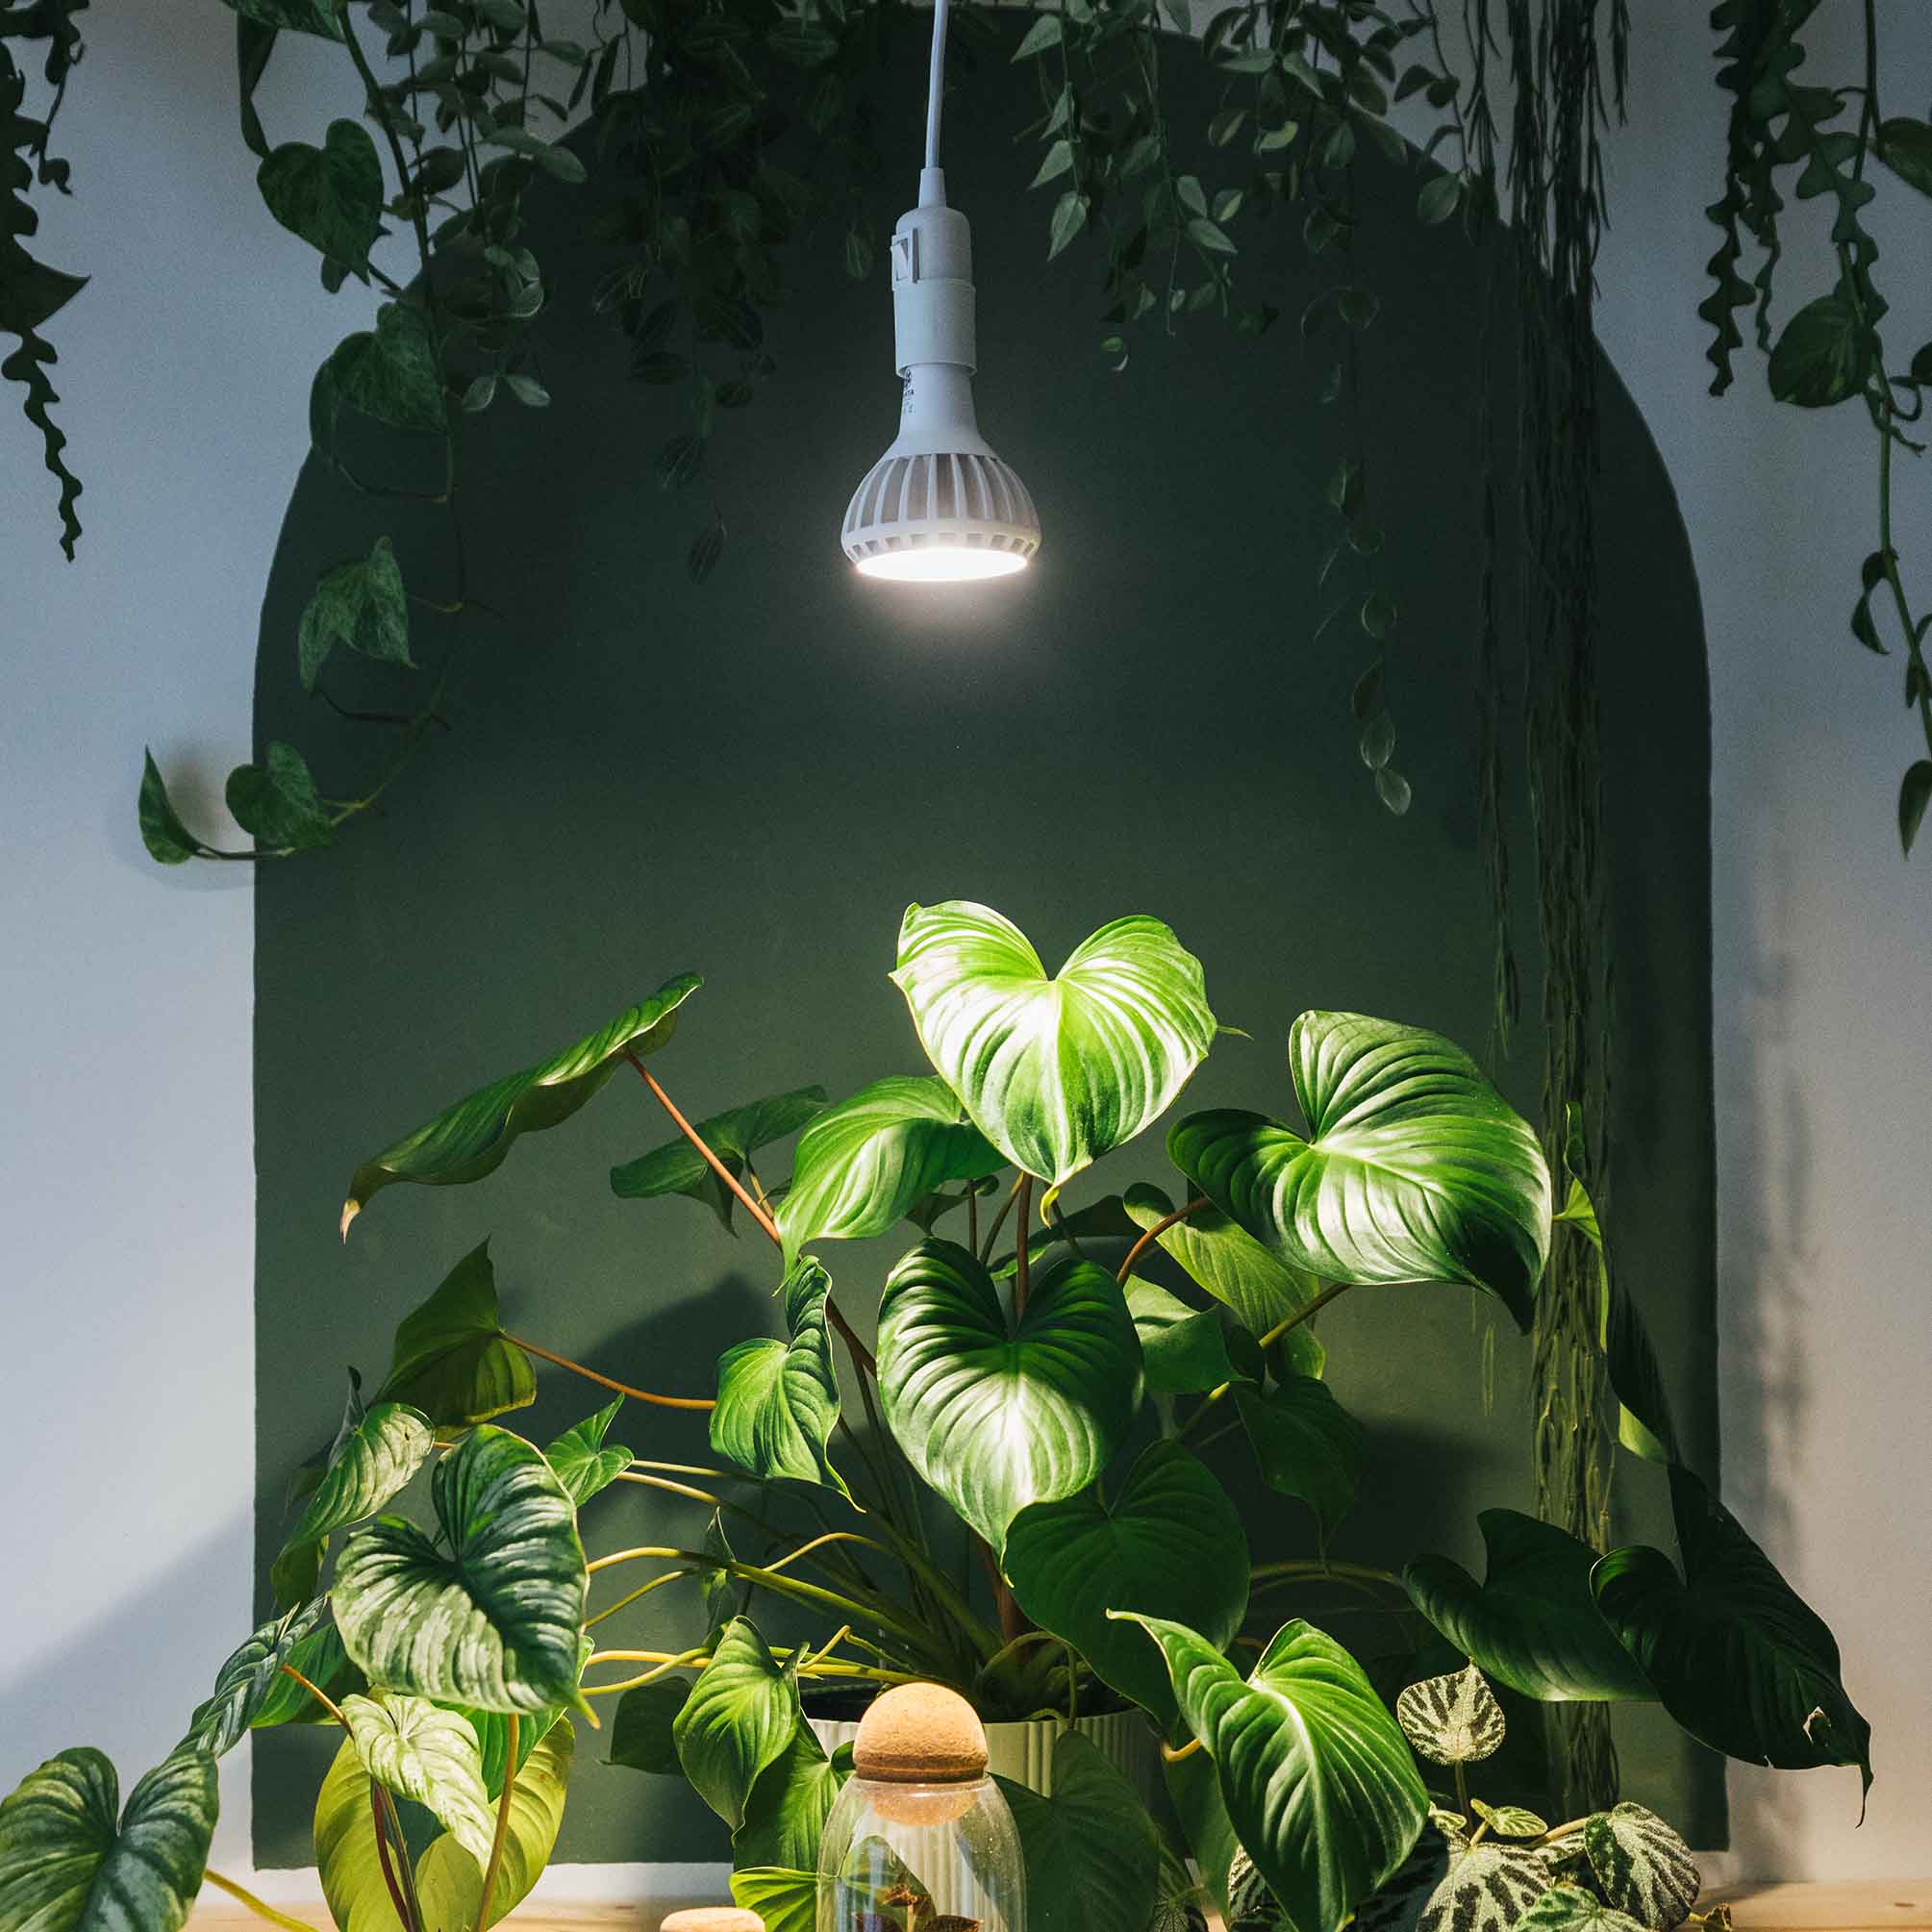 Pianta grow light in ceiling pendant fixture over plants